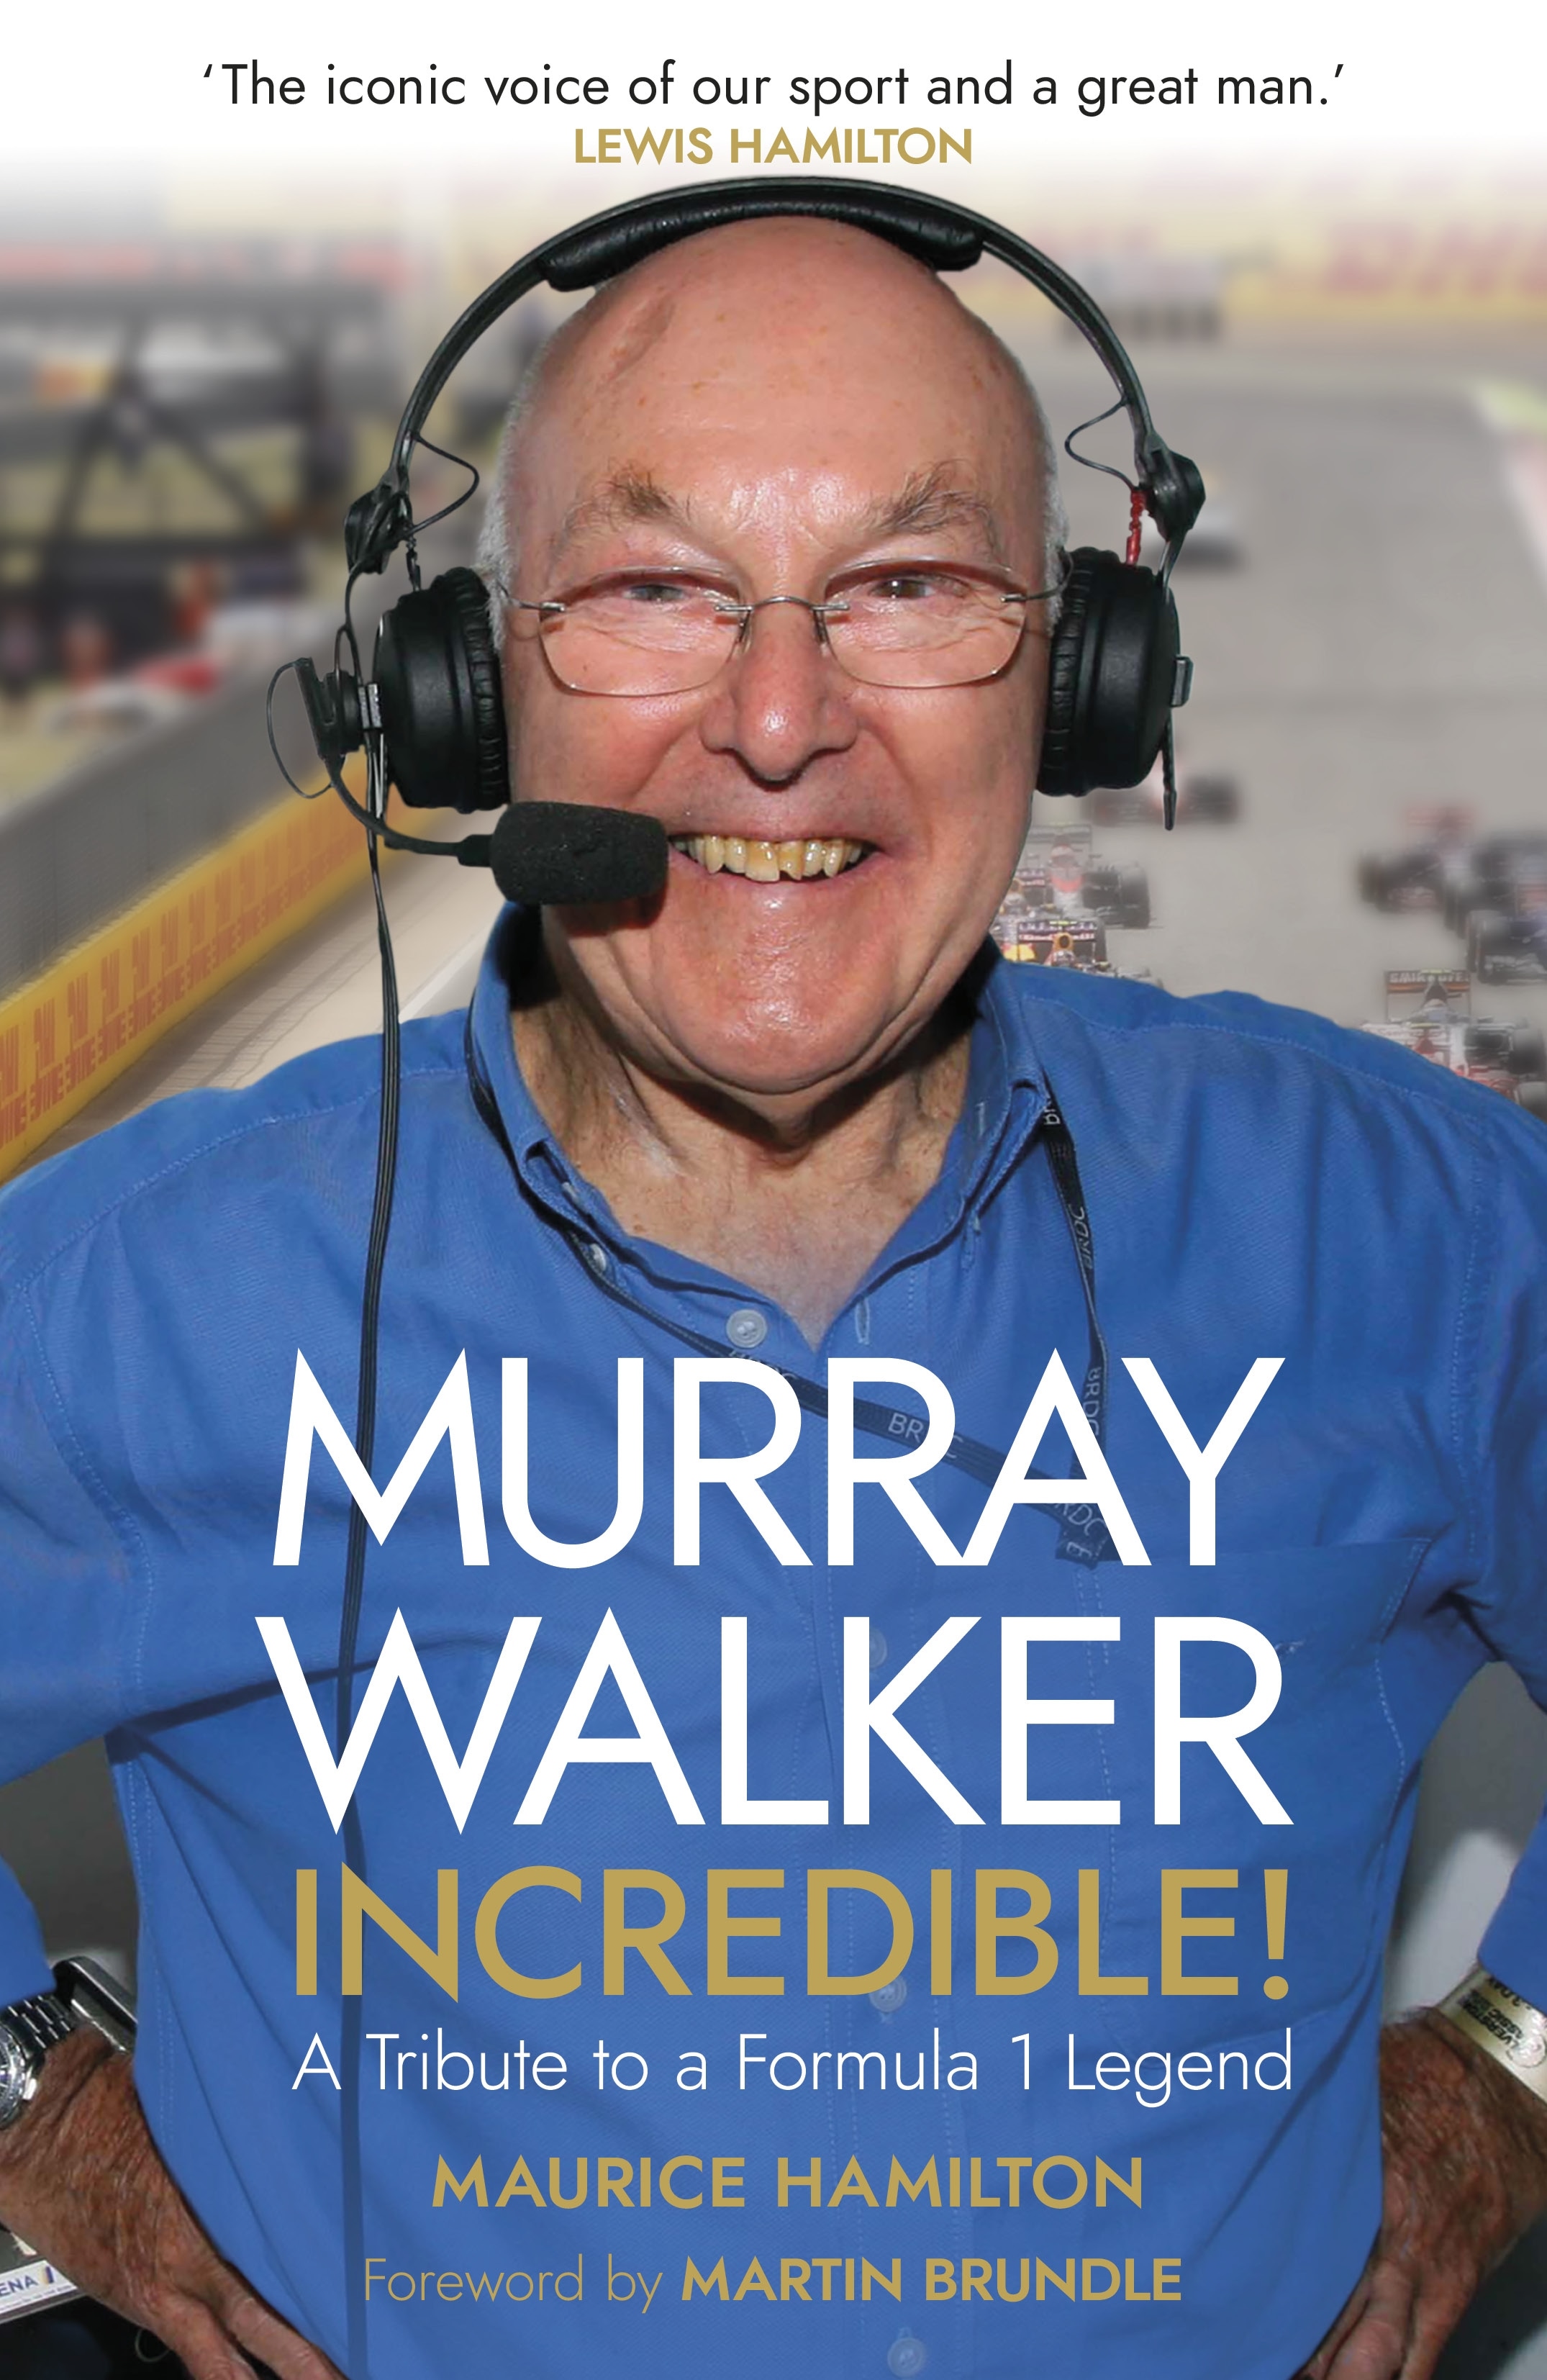 Book “Murray Walker: Incredible!” by Maurice Hamilton, Martin Brundle — November 11, 2021